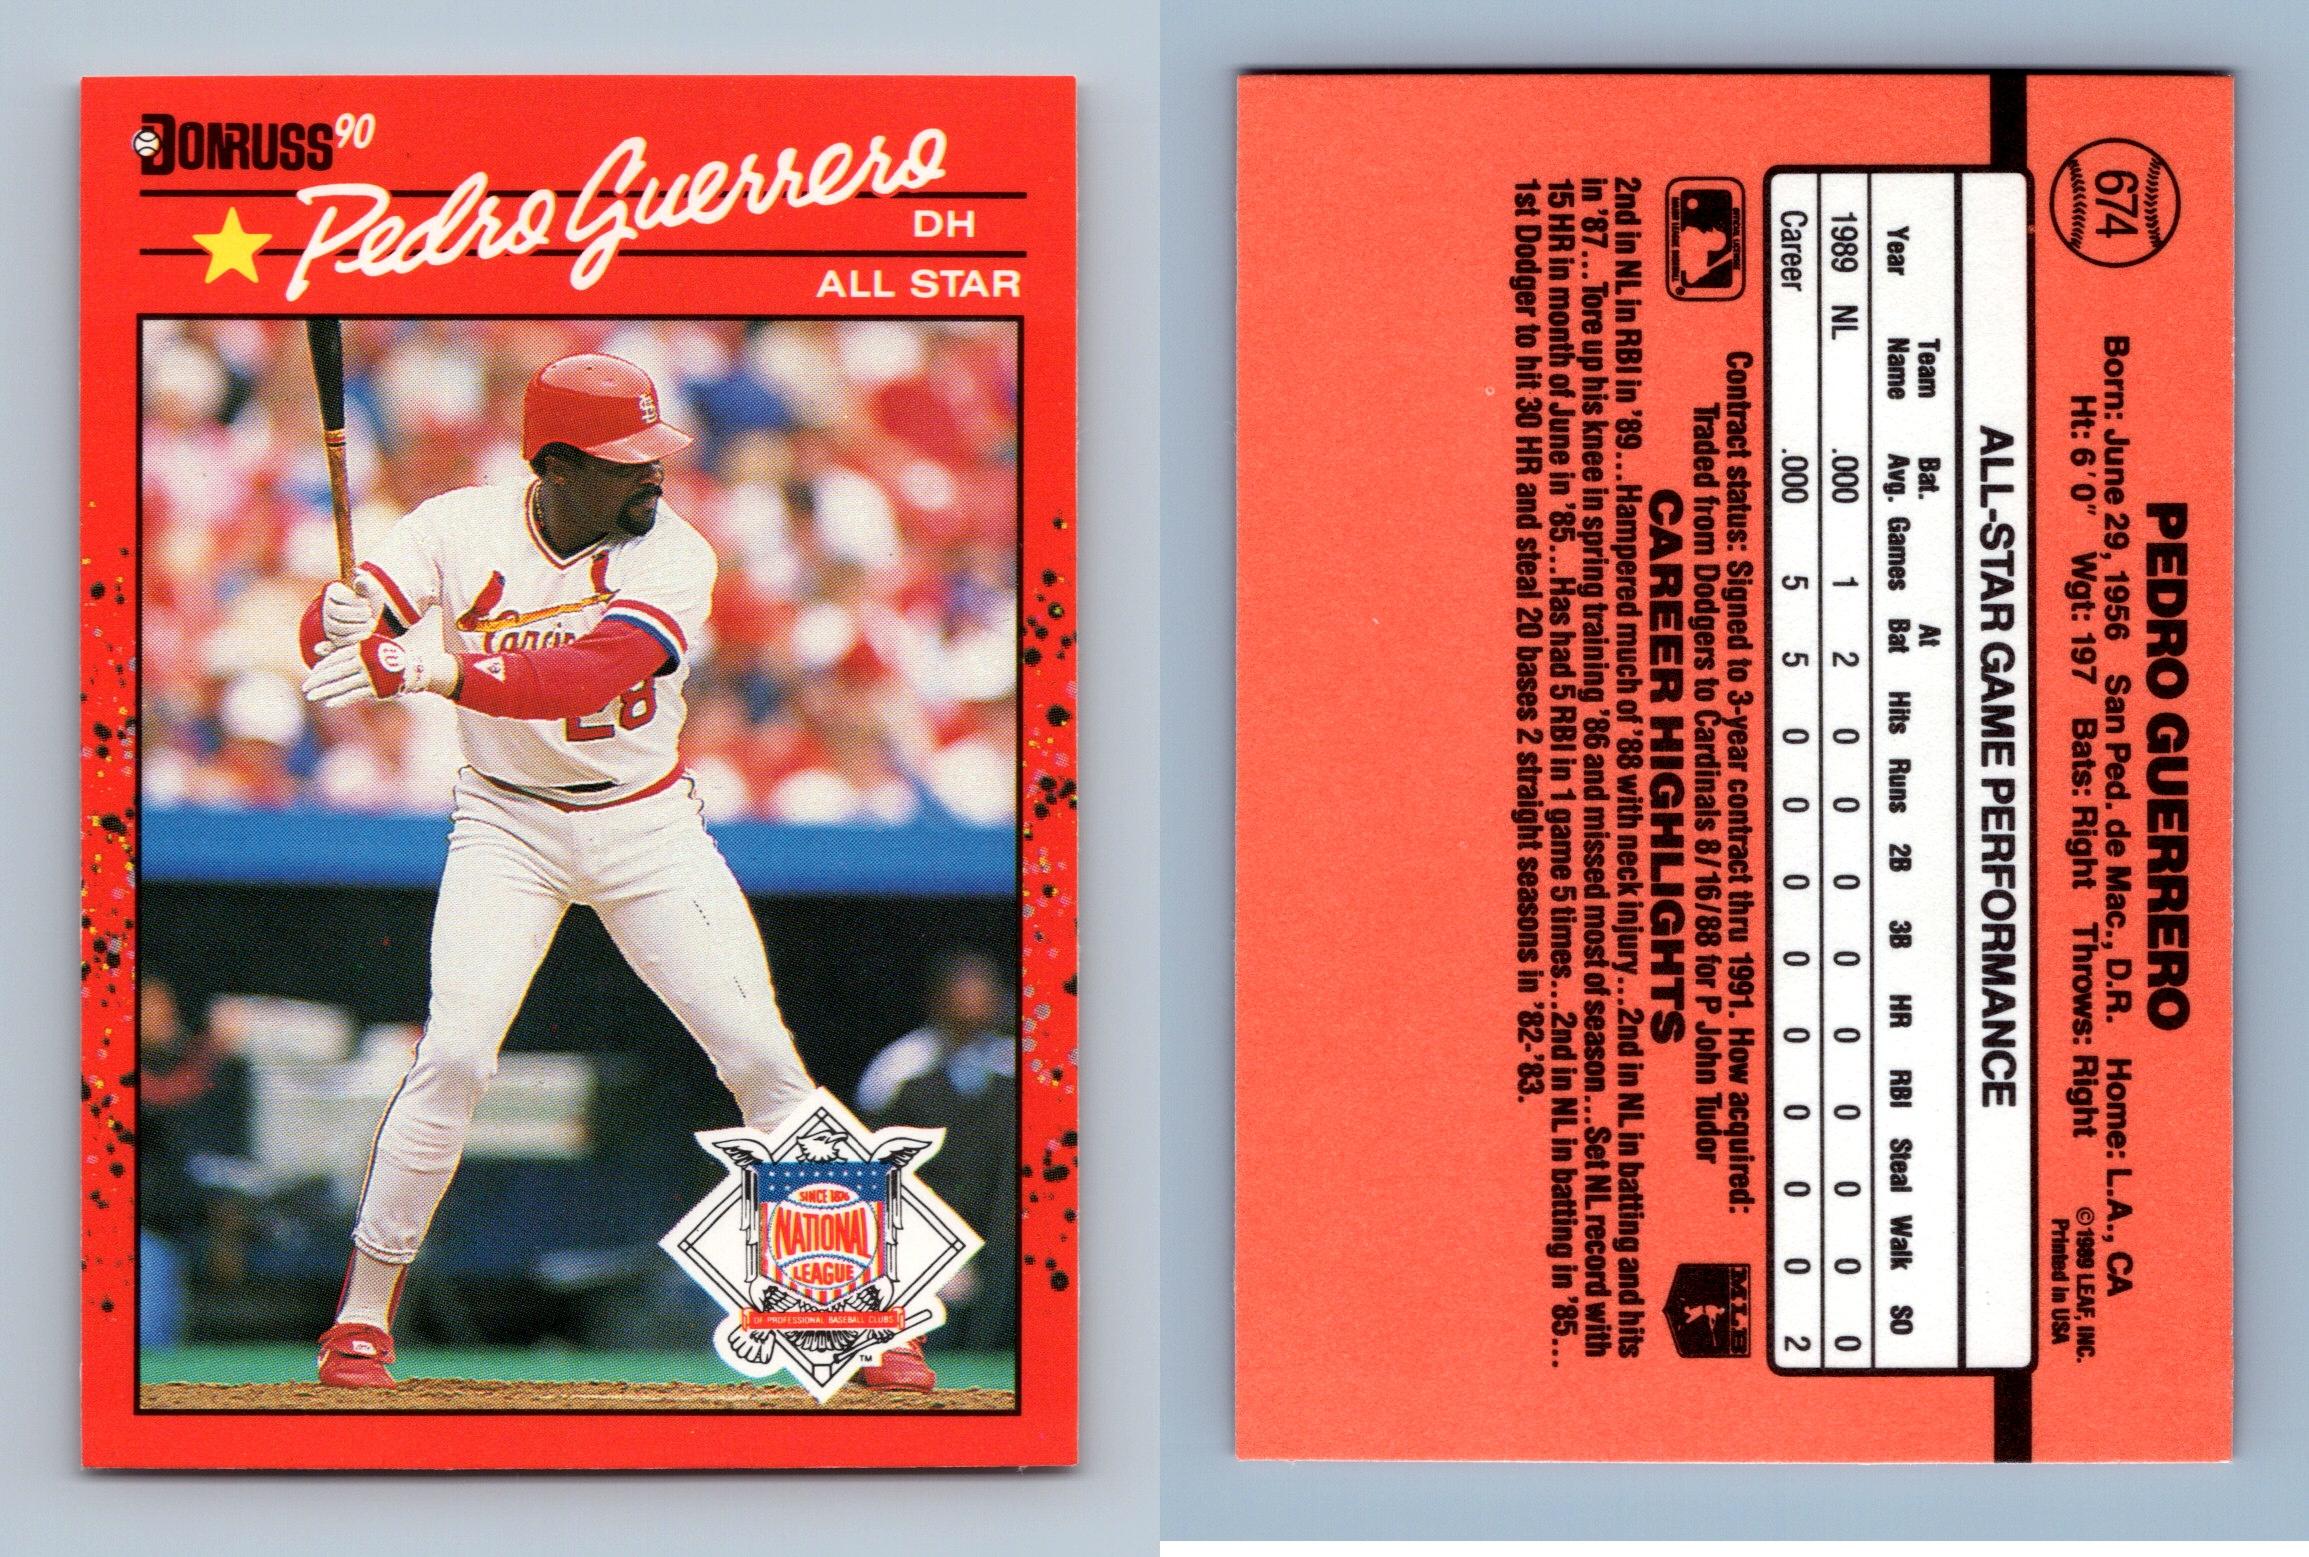 Pedro Guerrero - All Star #674 Donruss 1990 Baseball Trading Card